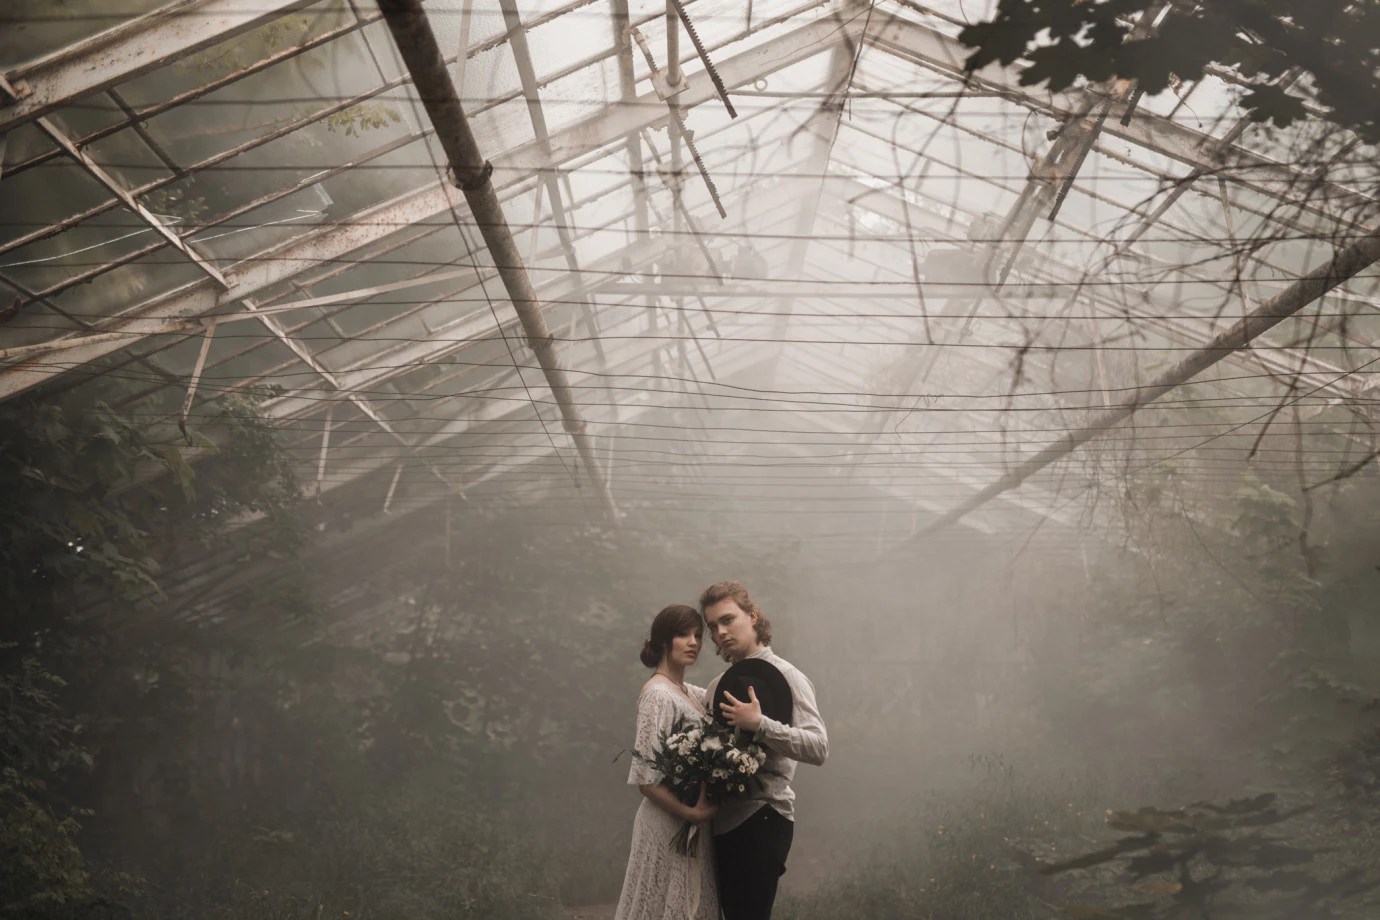 fotograf wroclaw klaudia portfolio zdjecia zdjecia slubne inspiracje wesele plener slubny sesja slubna